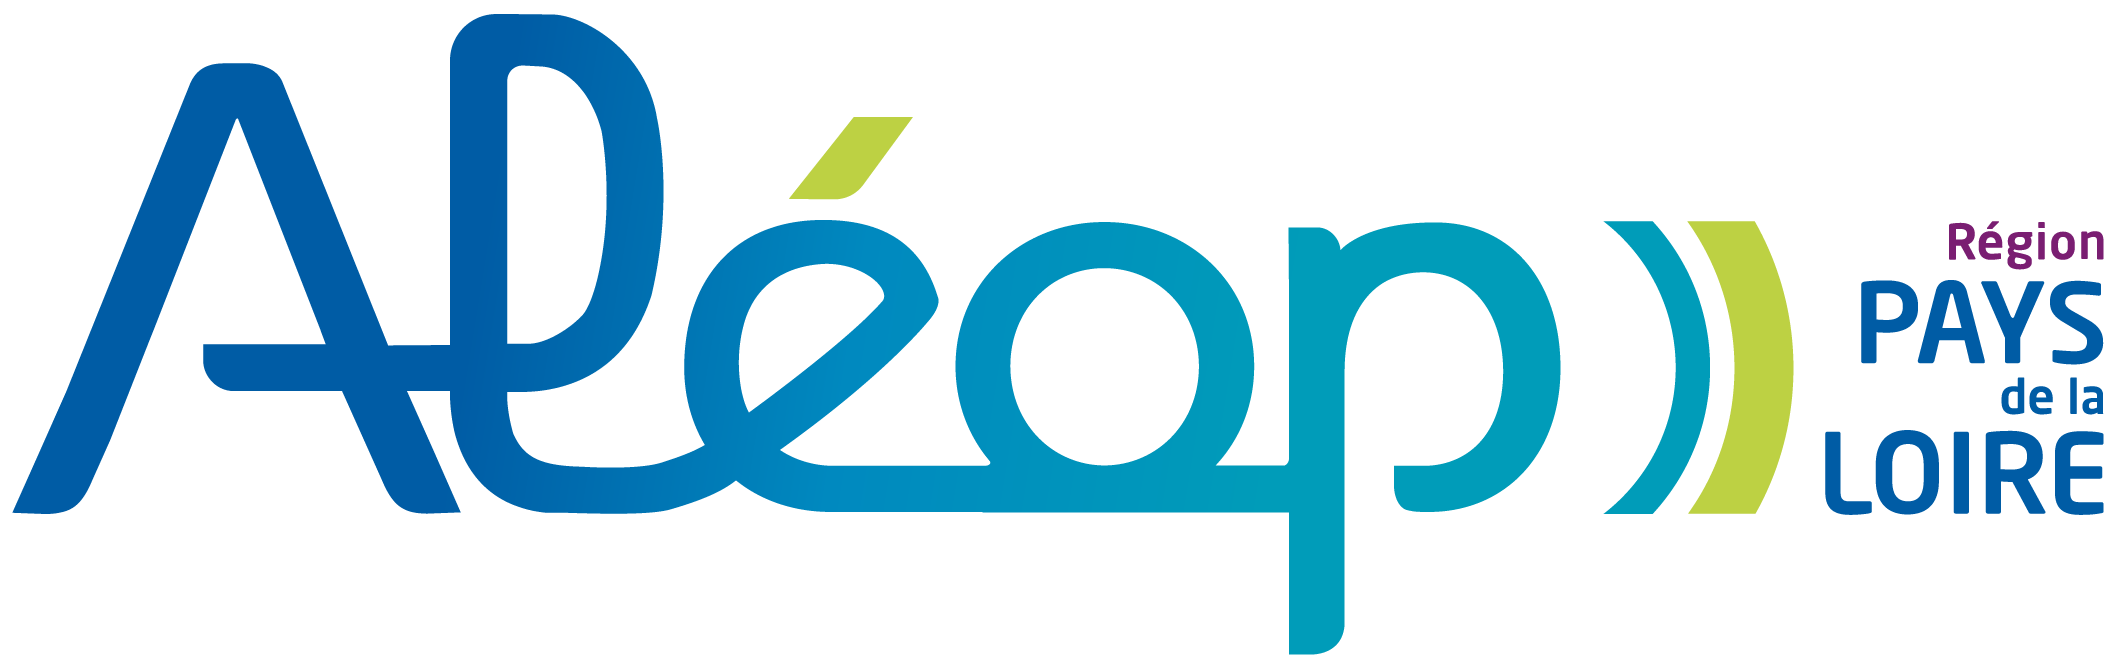 logo-aleop.png